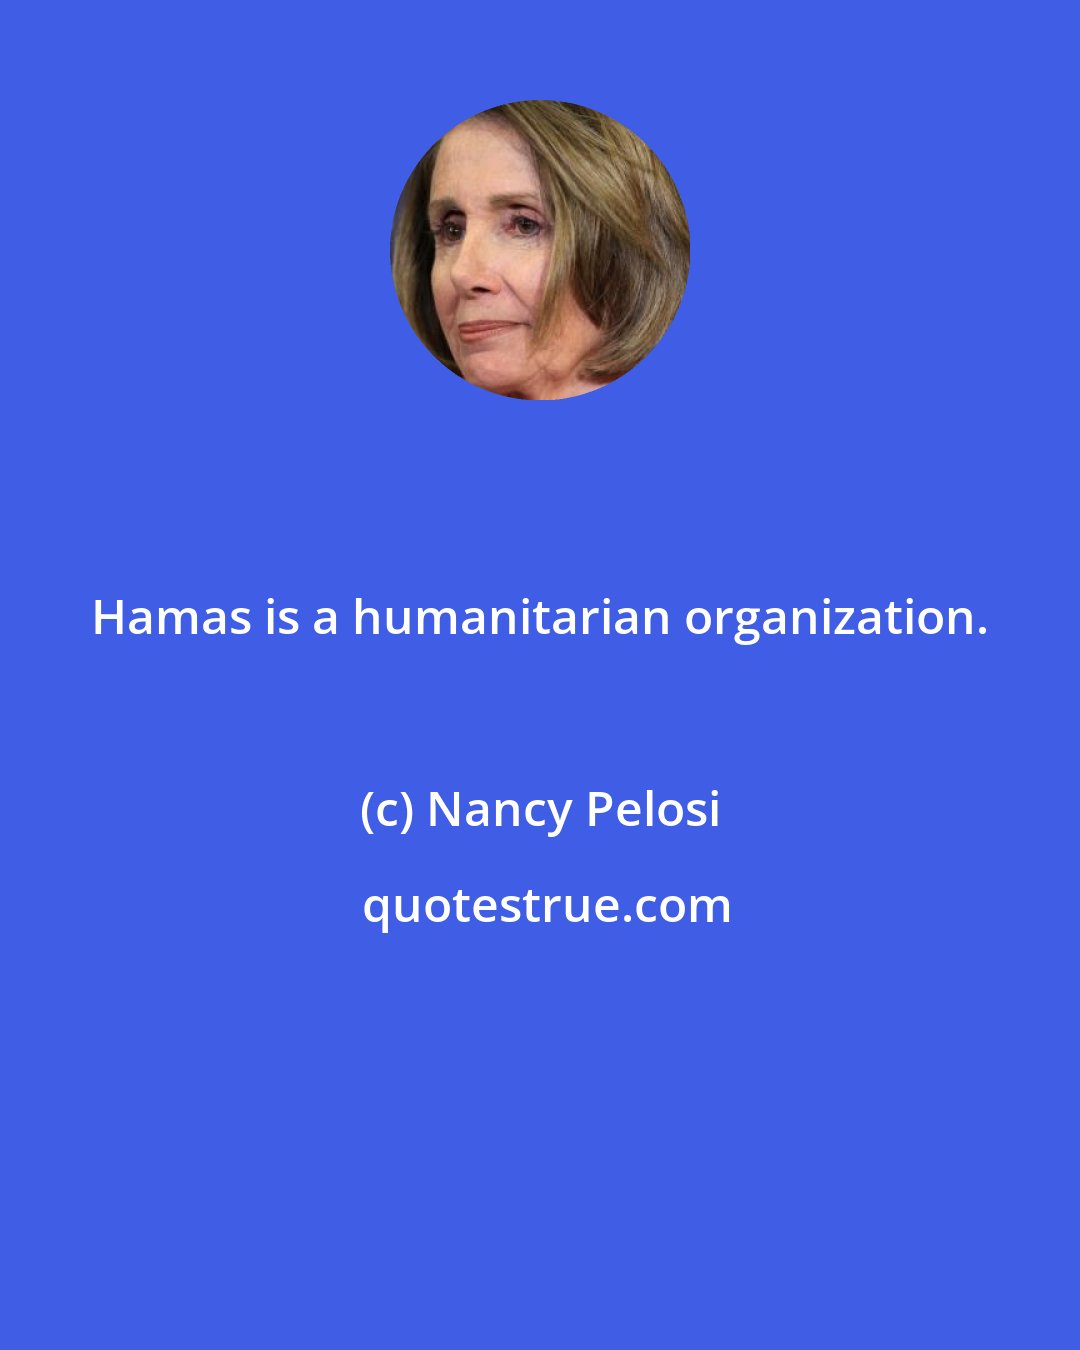 Nancy Pelosi: Hamas is a humanitarian organization.